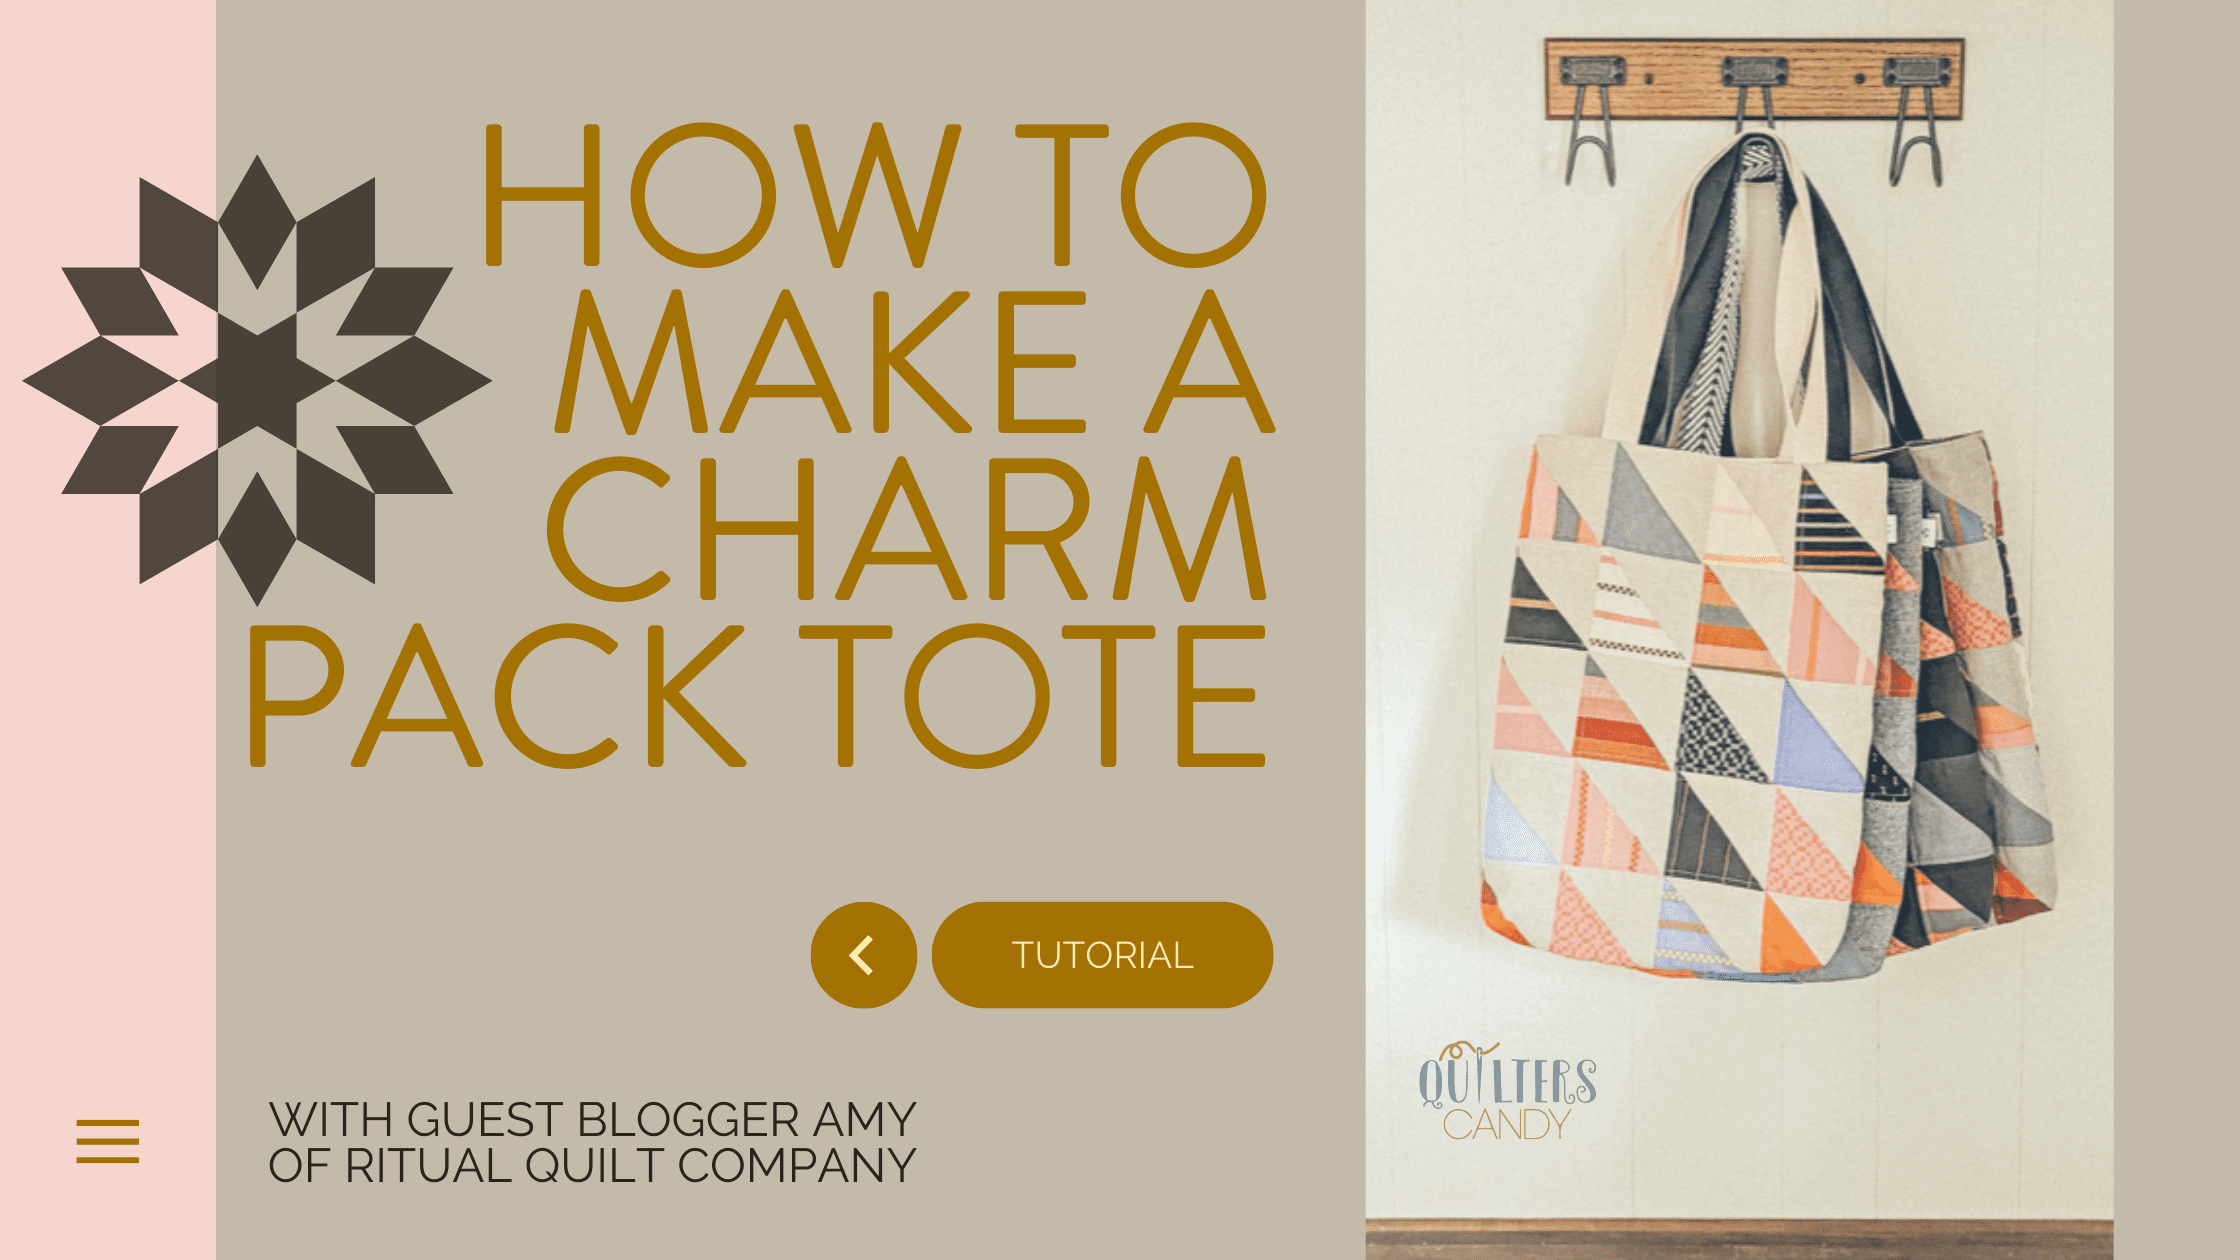 How to Transform a Branded Bag into a Cute Pocket Tote {A No-Sew Tutorial}